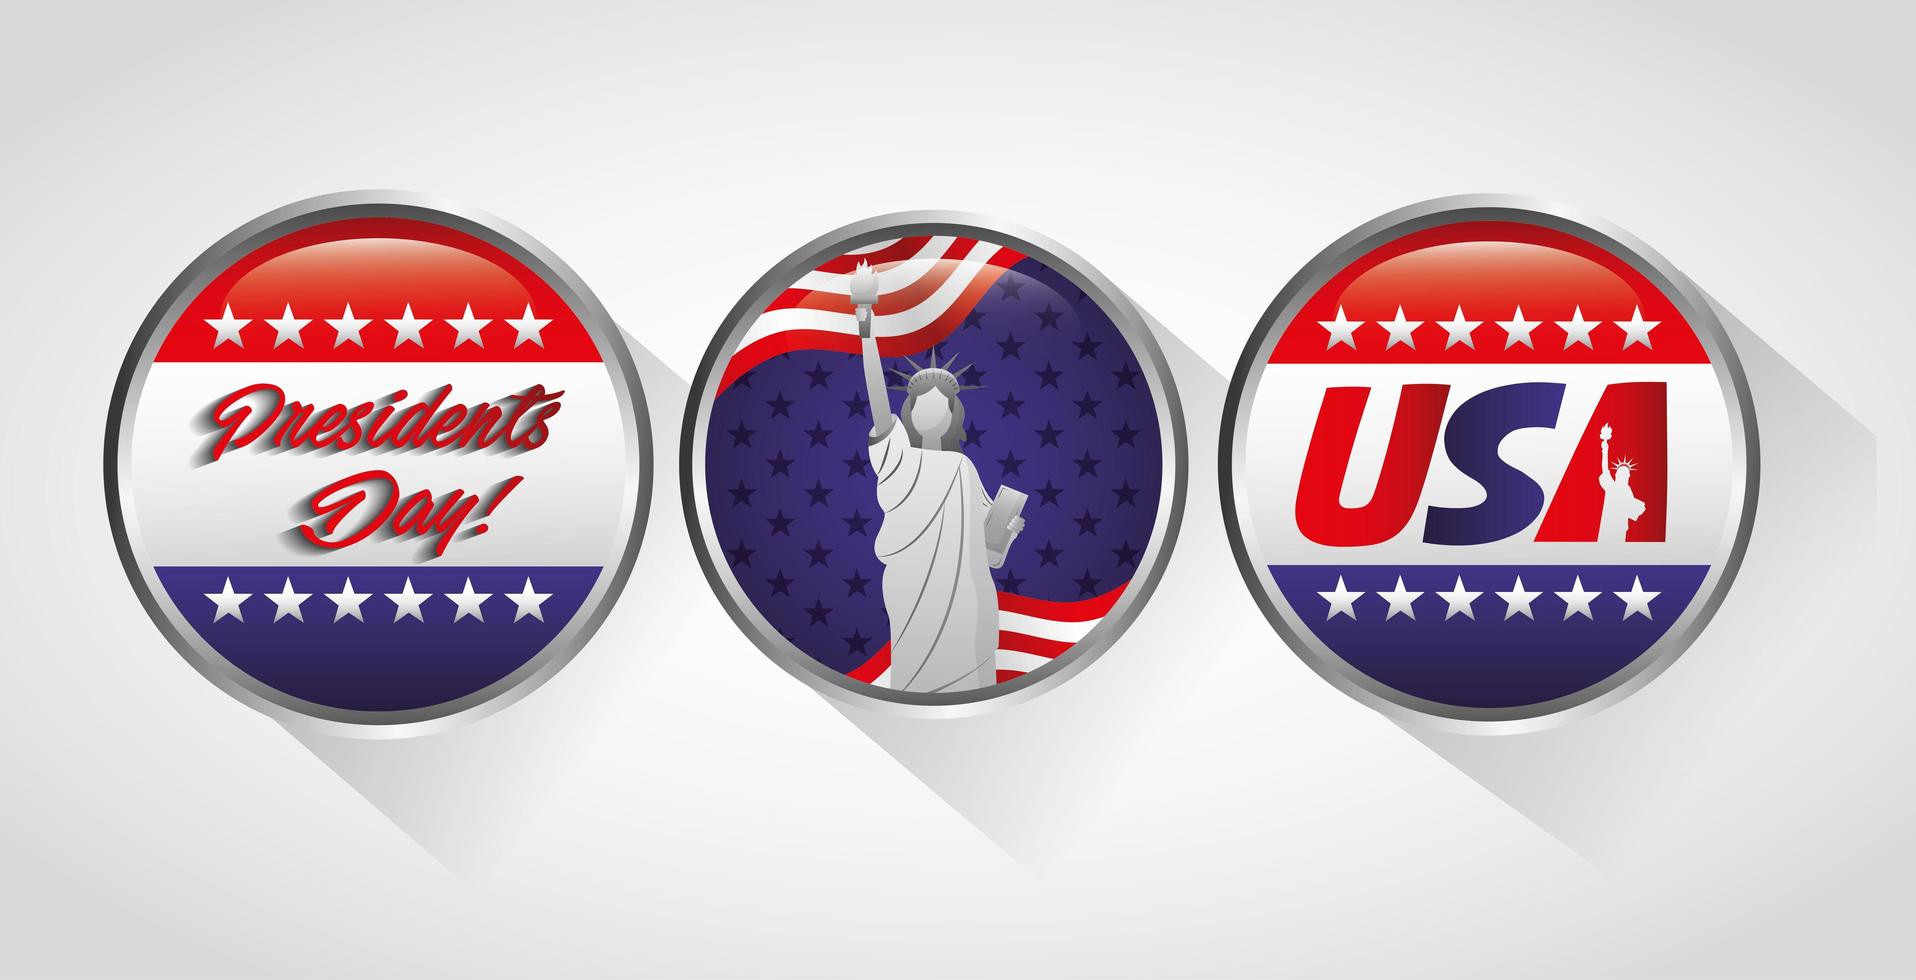 happy presidents day celebration USA button set vector